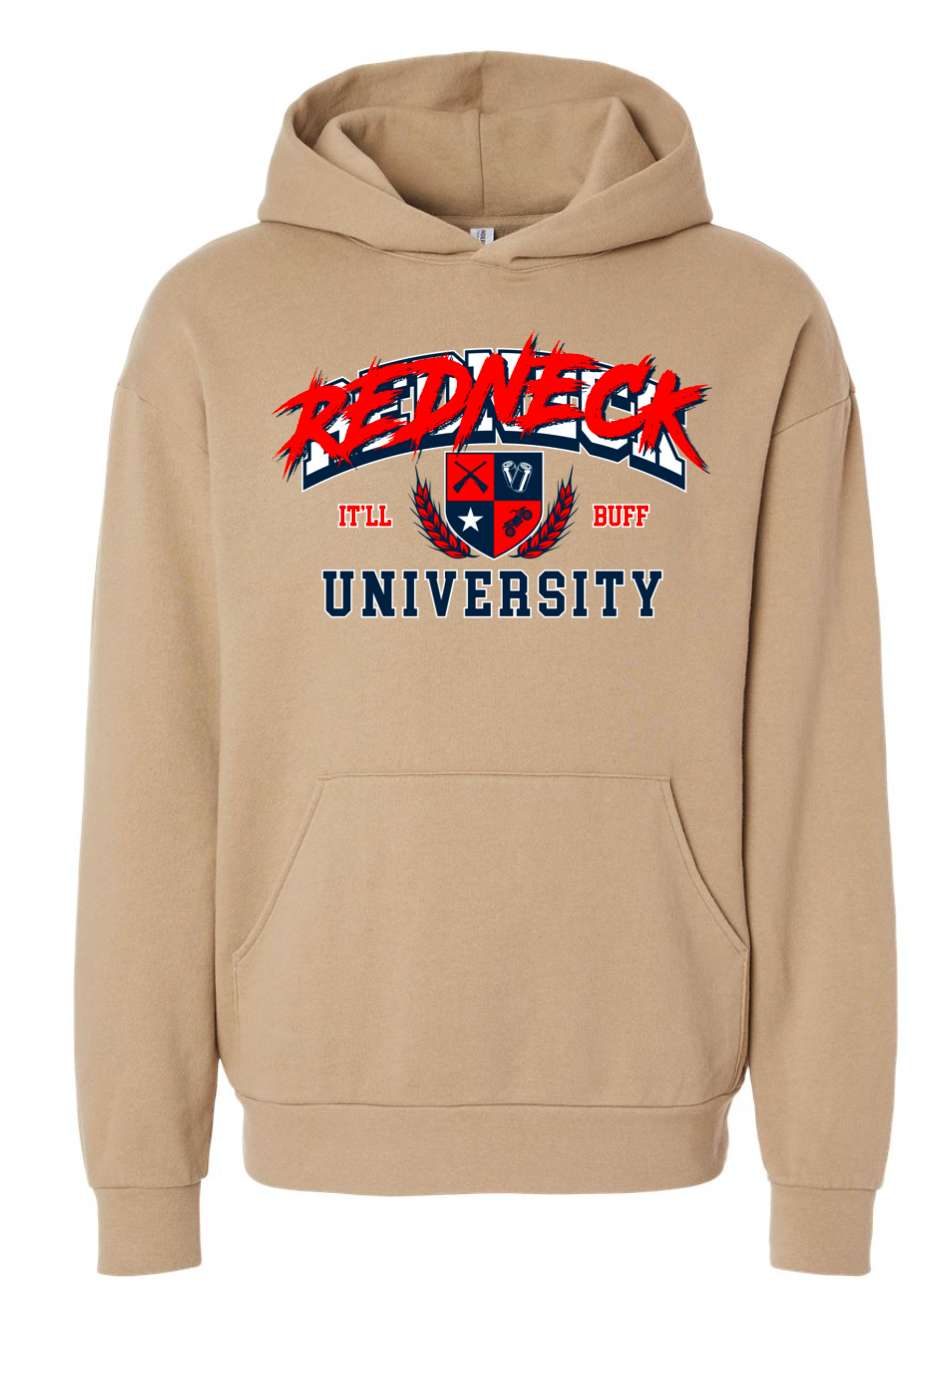 Red Neck University Hoodie